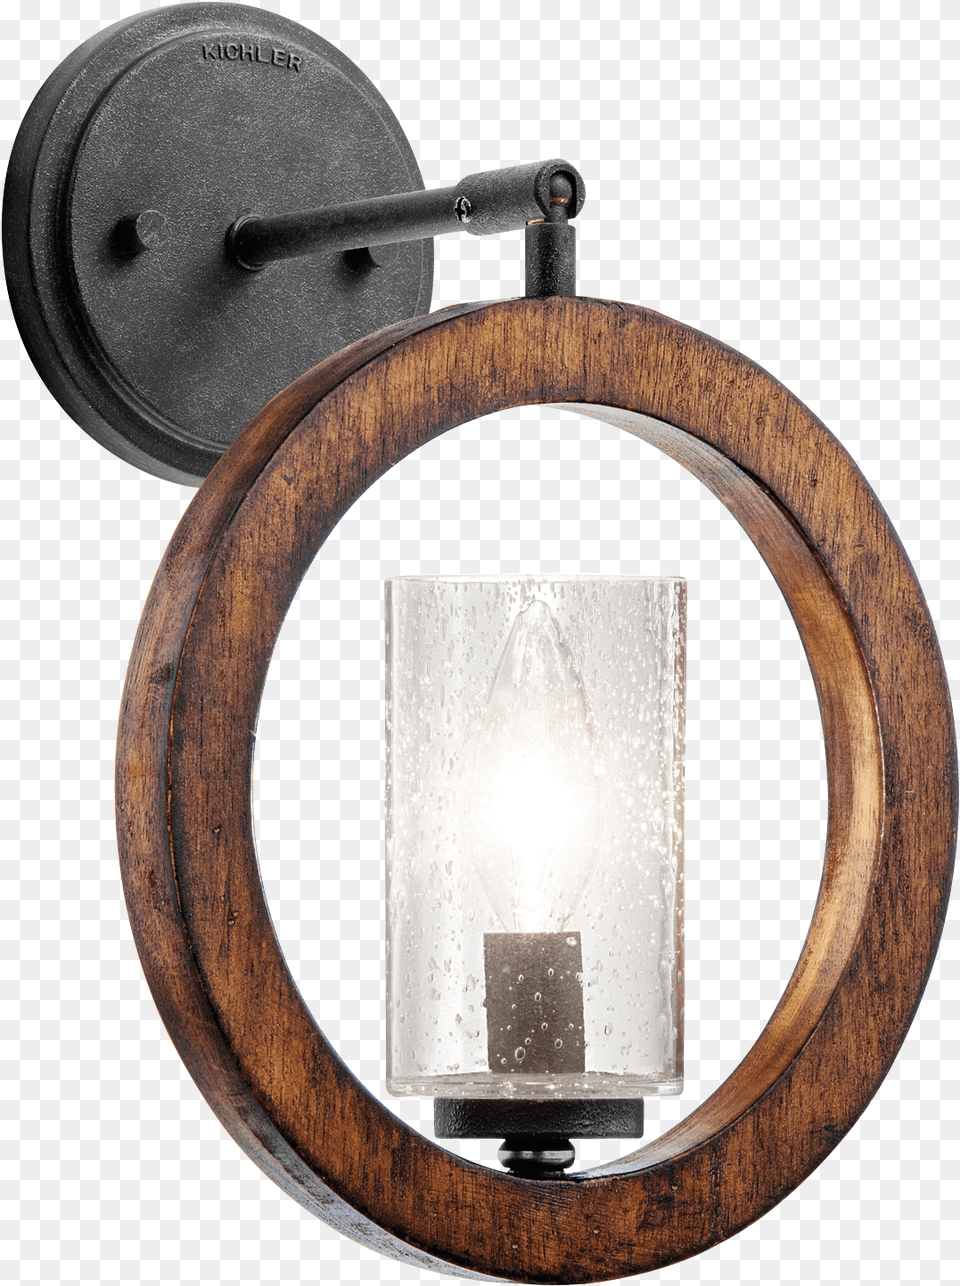 String Light Fixture Lighting Pendant Rory Gallagher Irish Tour 74, Lamp, Light Fixture Png Image